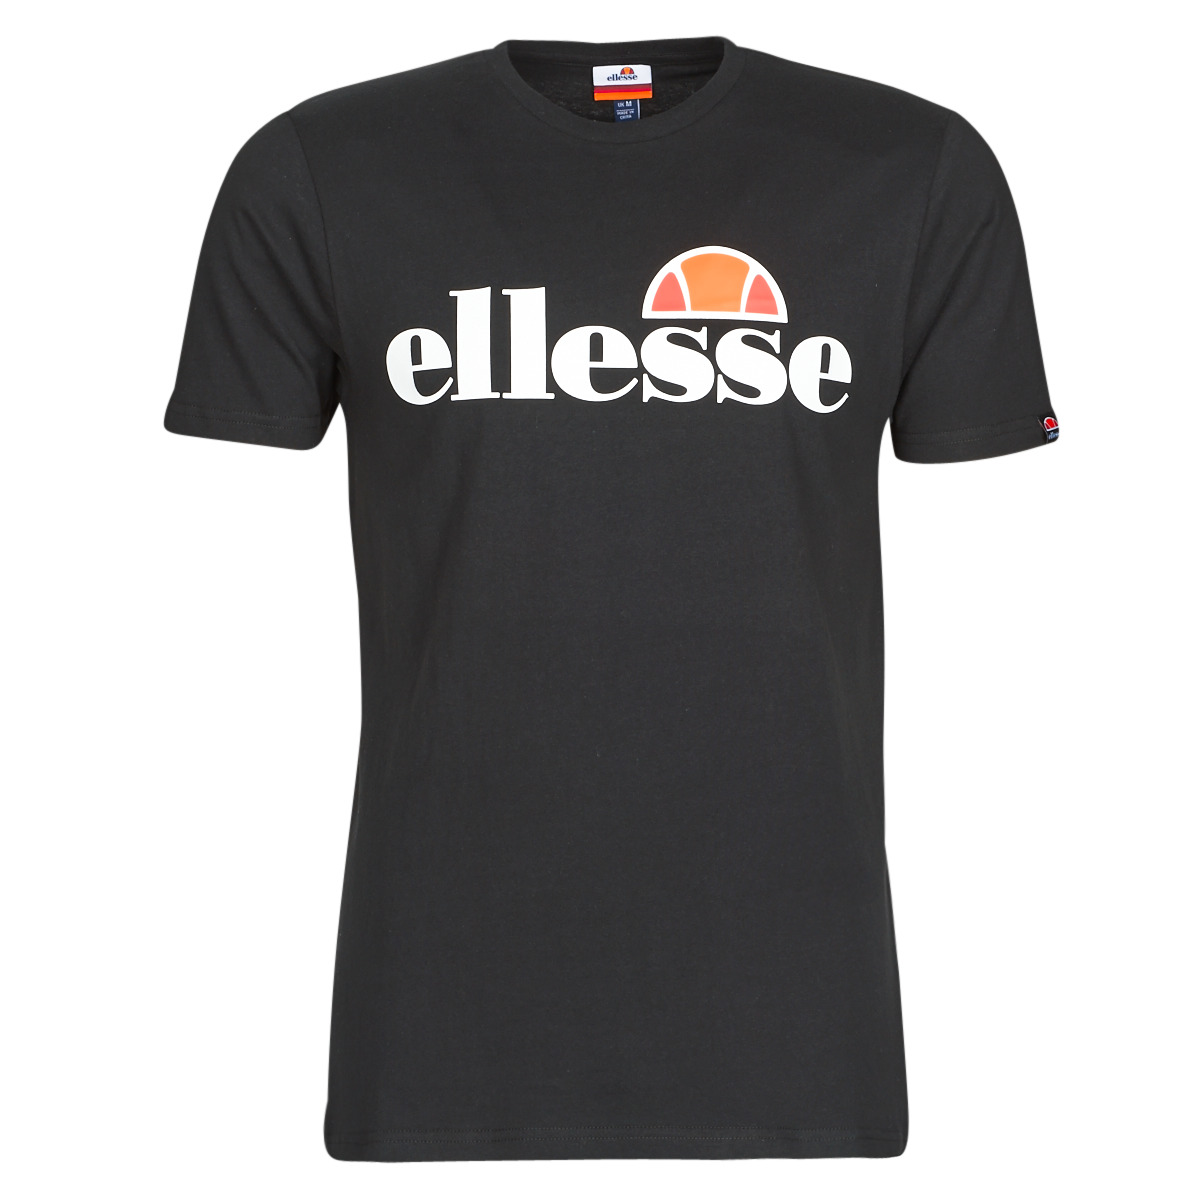 T-shirt με κοντά μανίκια Ellesse SL PRADO